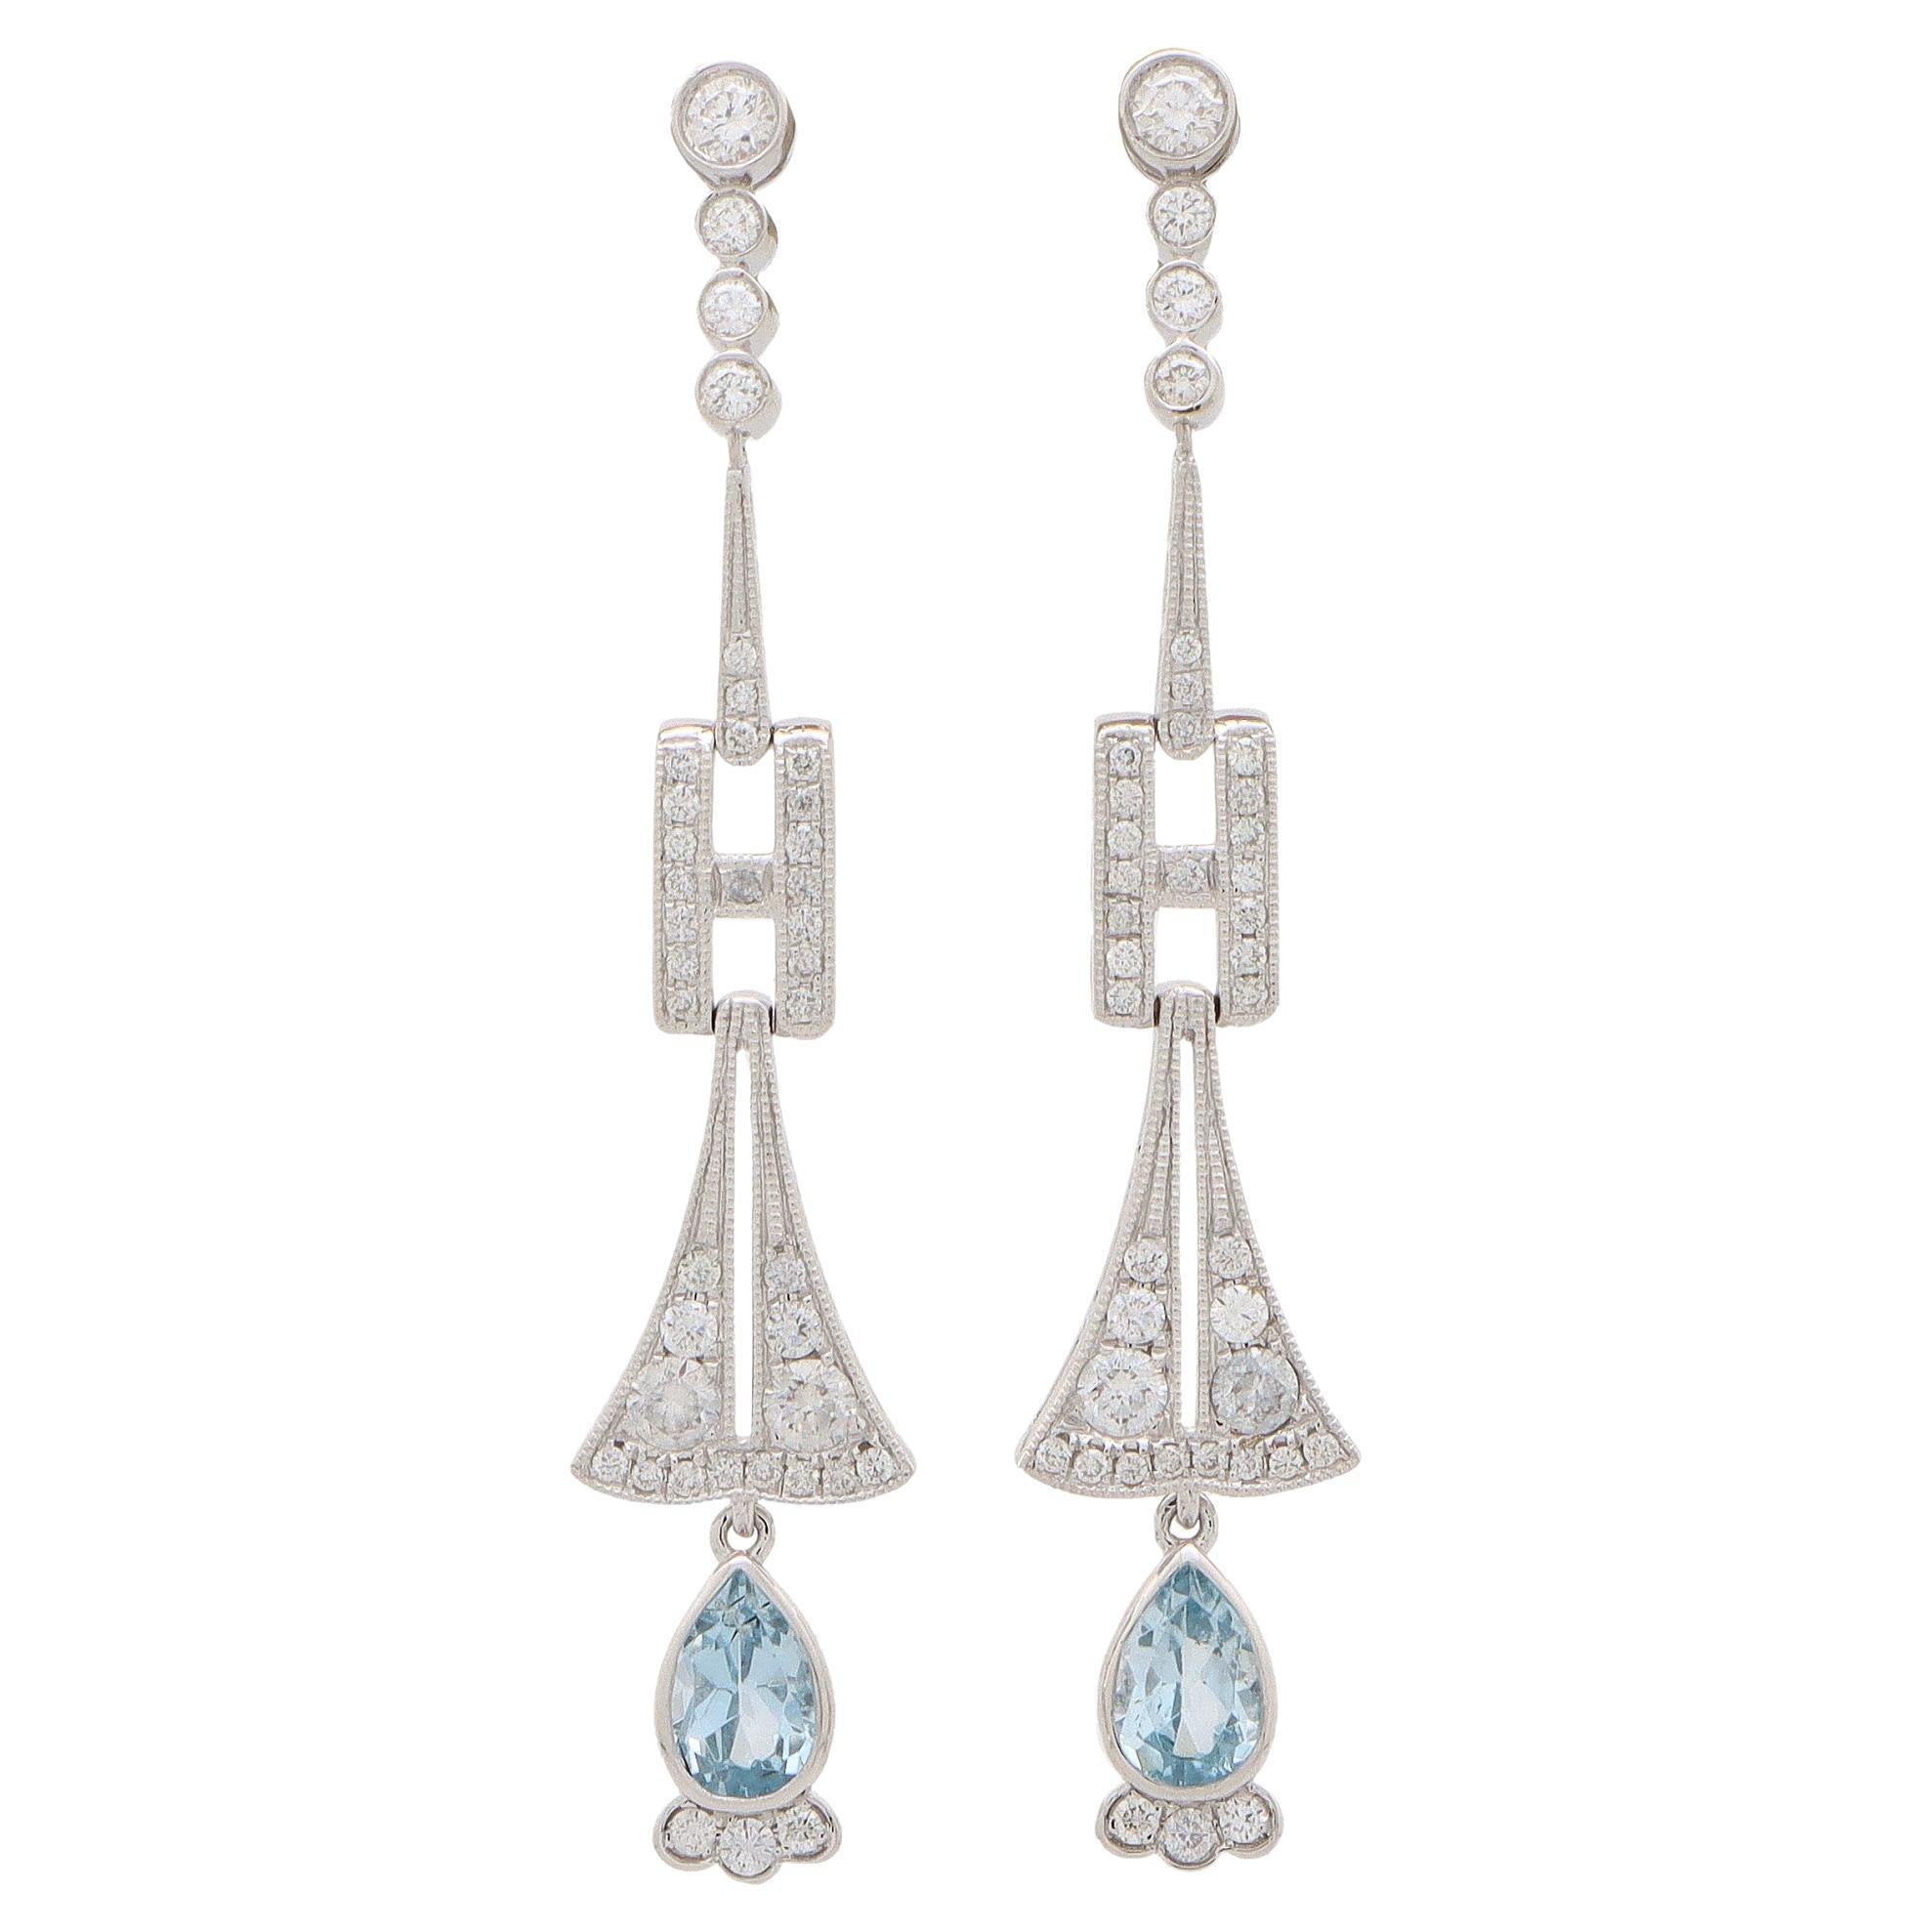  Art Deco Style Aquamarine and Diamond Drop Earrings Set in 18k White Gold